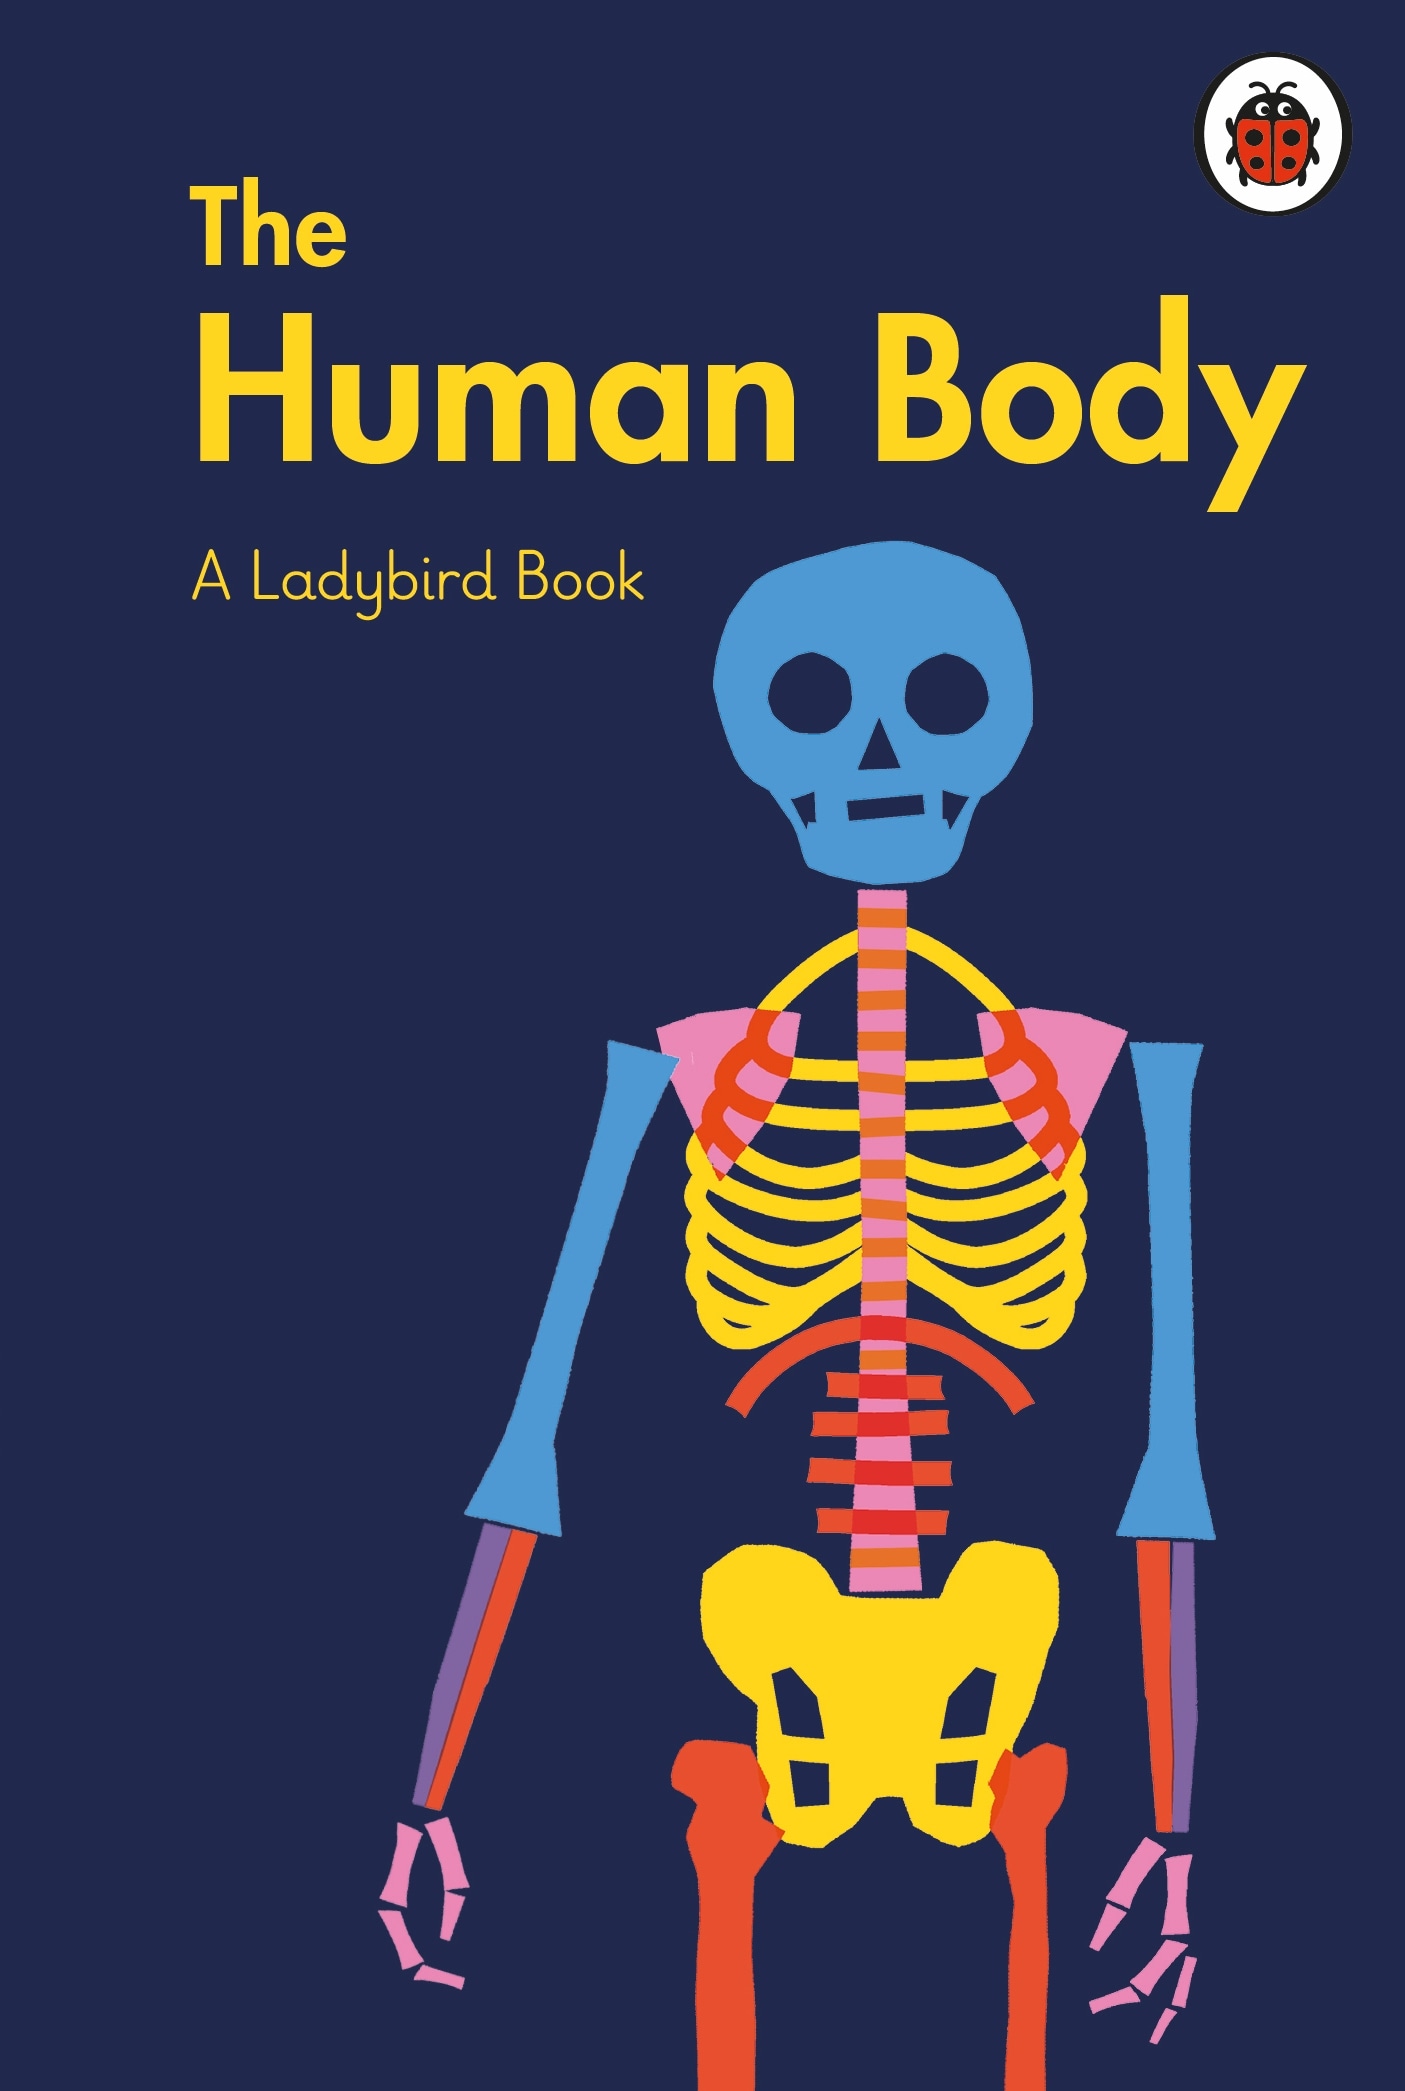 Book “A Ladybird Book: The Human Body” by Elizabeth Jenner, Pawel Mildner — August 5, 2021